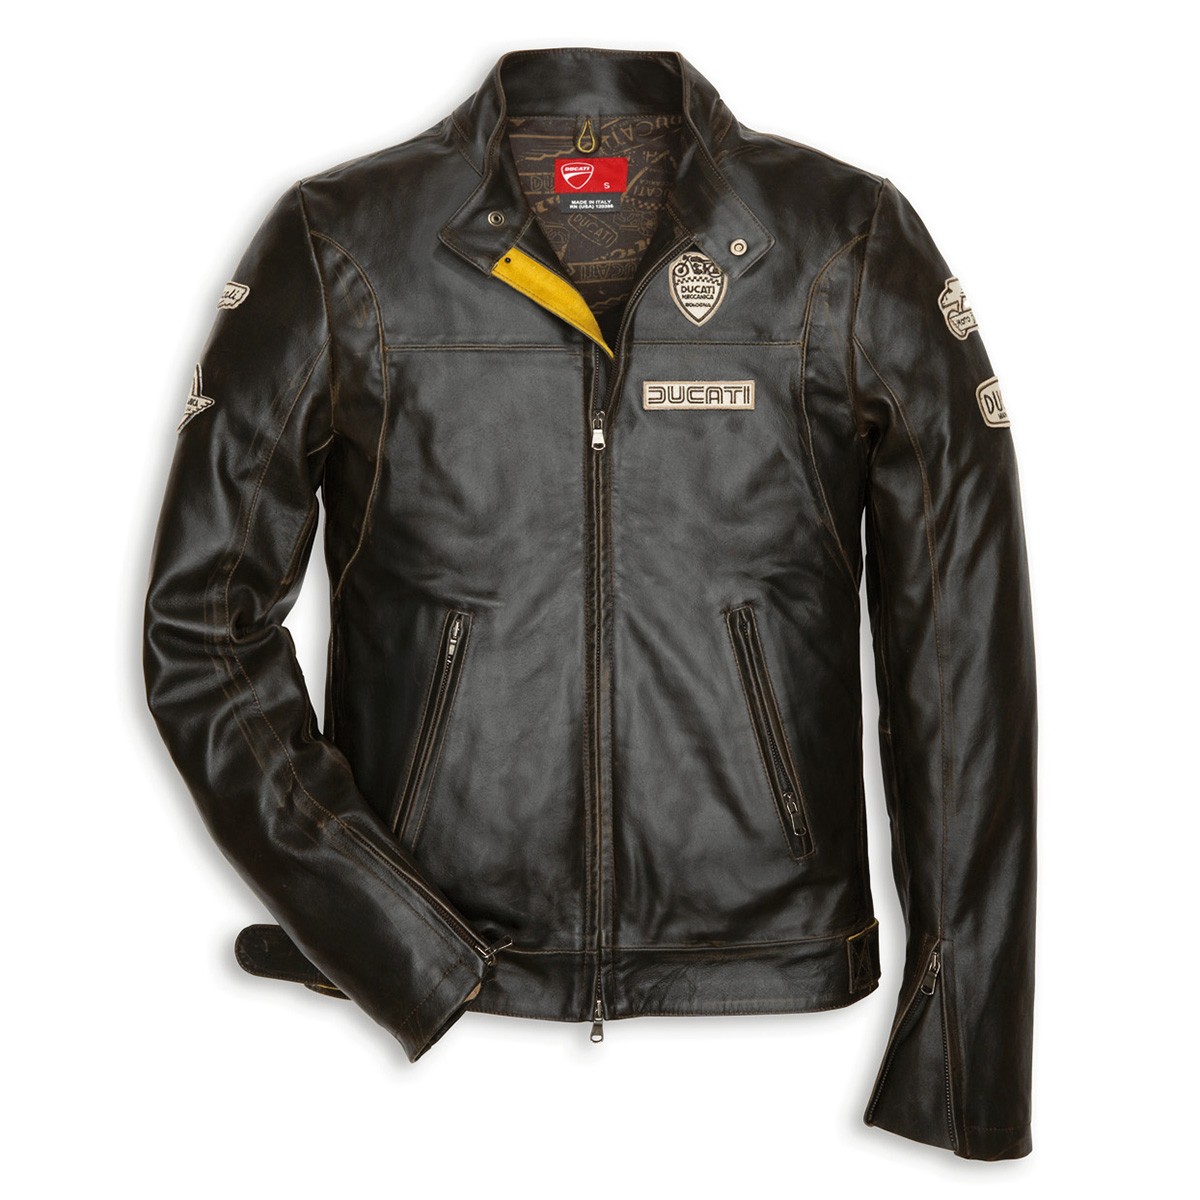 Ducati Historical 13 Leather Jacket - DucatiStore